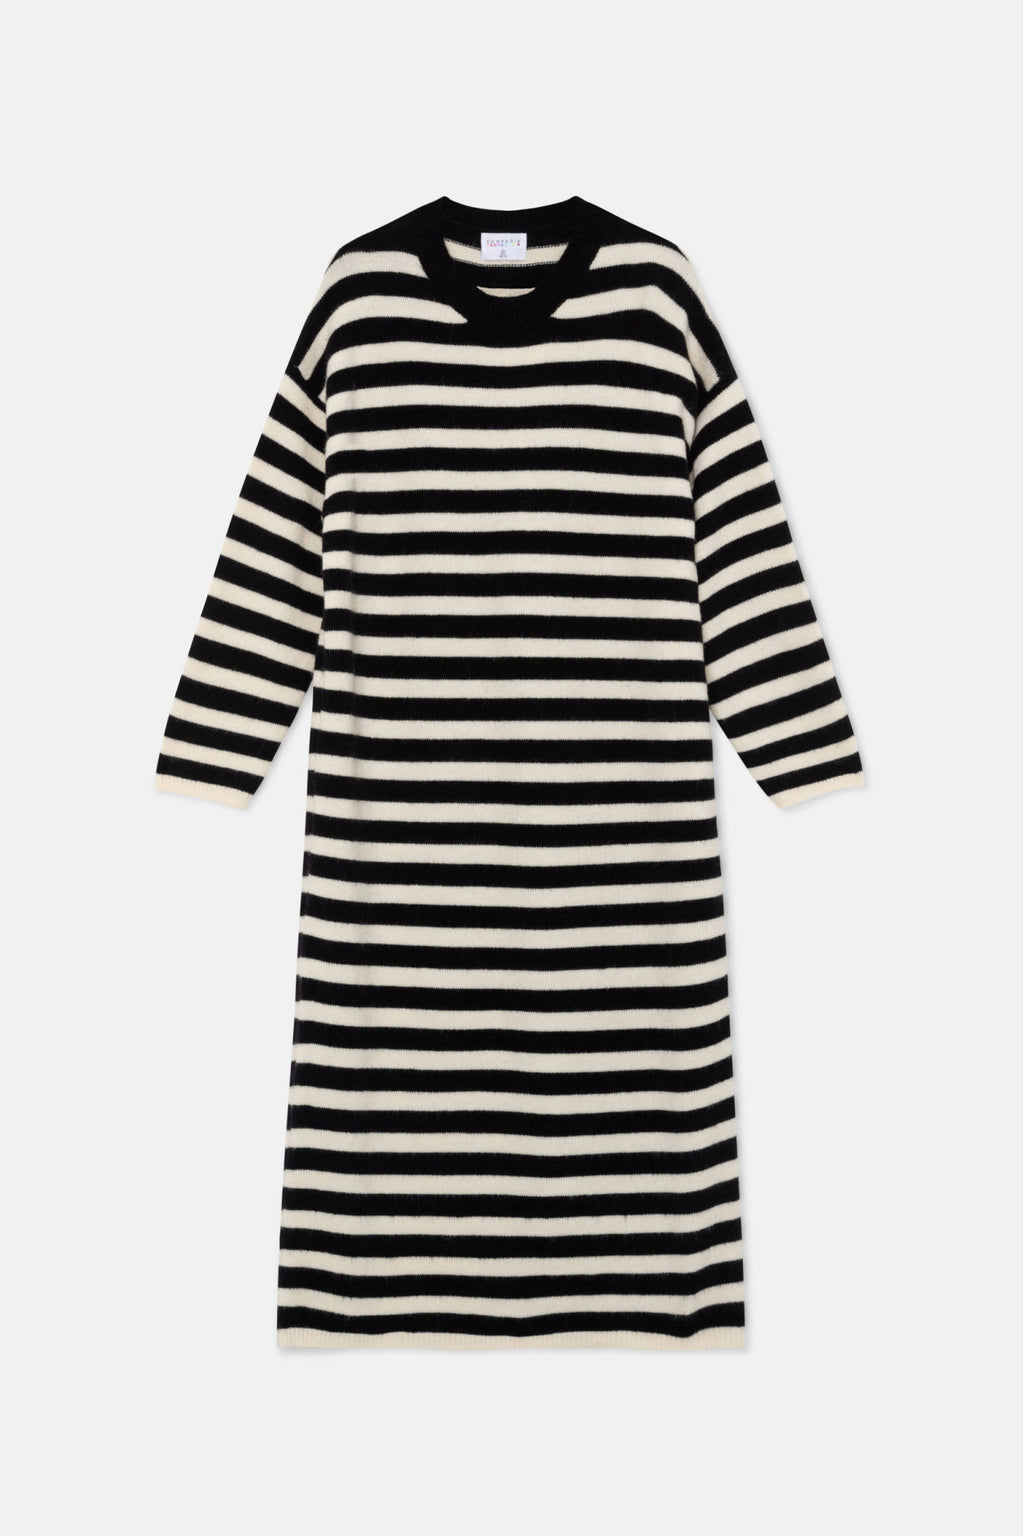 Compania Fantastica Striped Knitted Dress